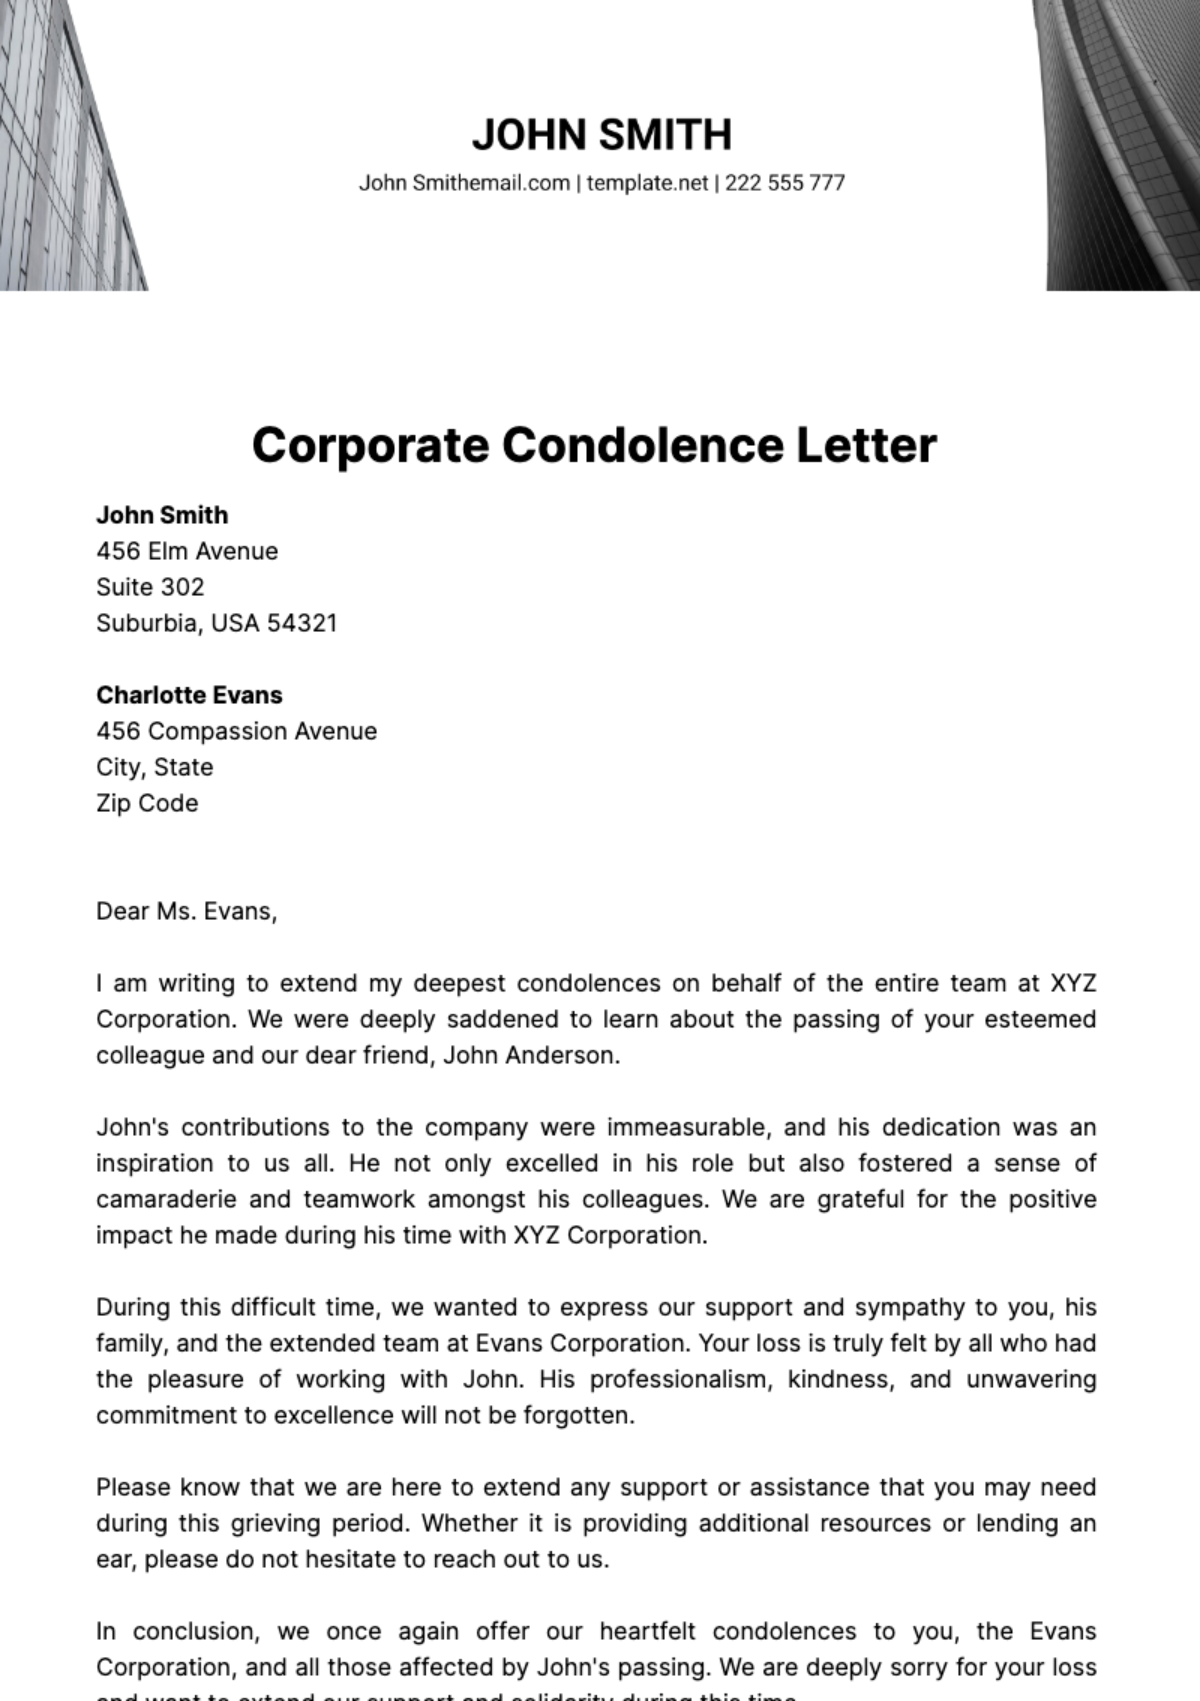 Corporate Condolence Letter Template